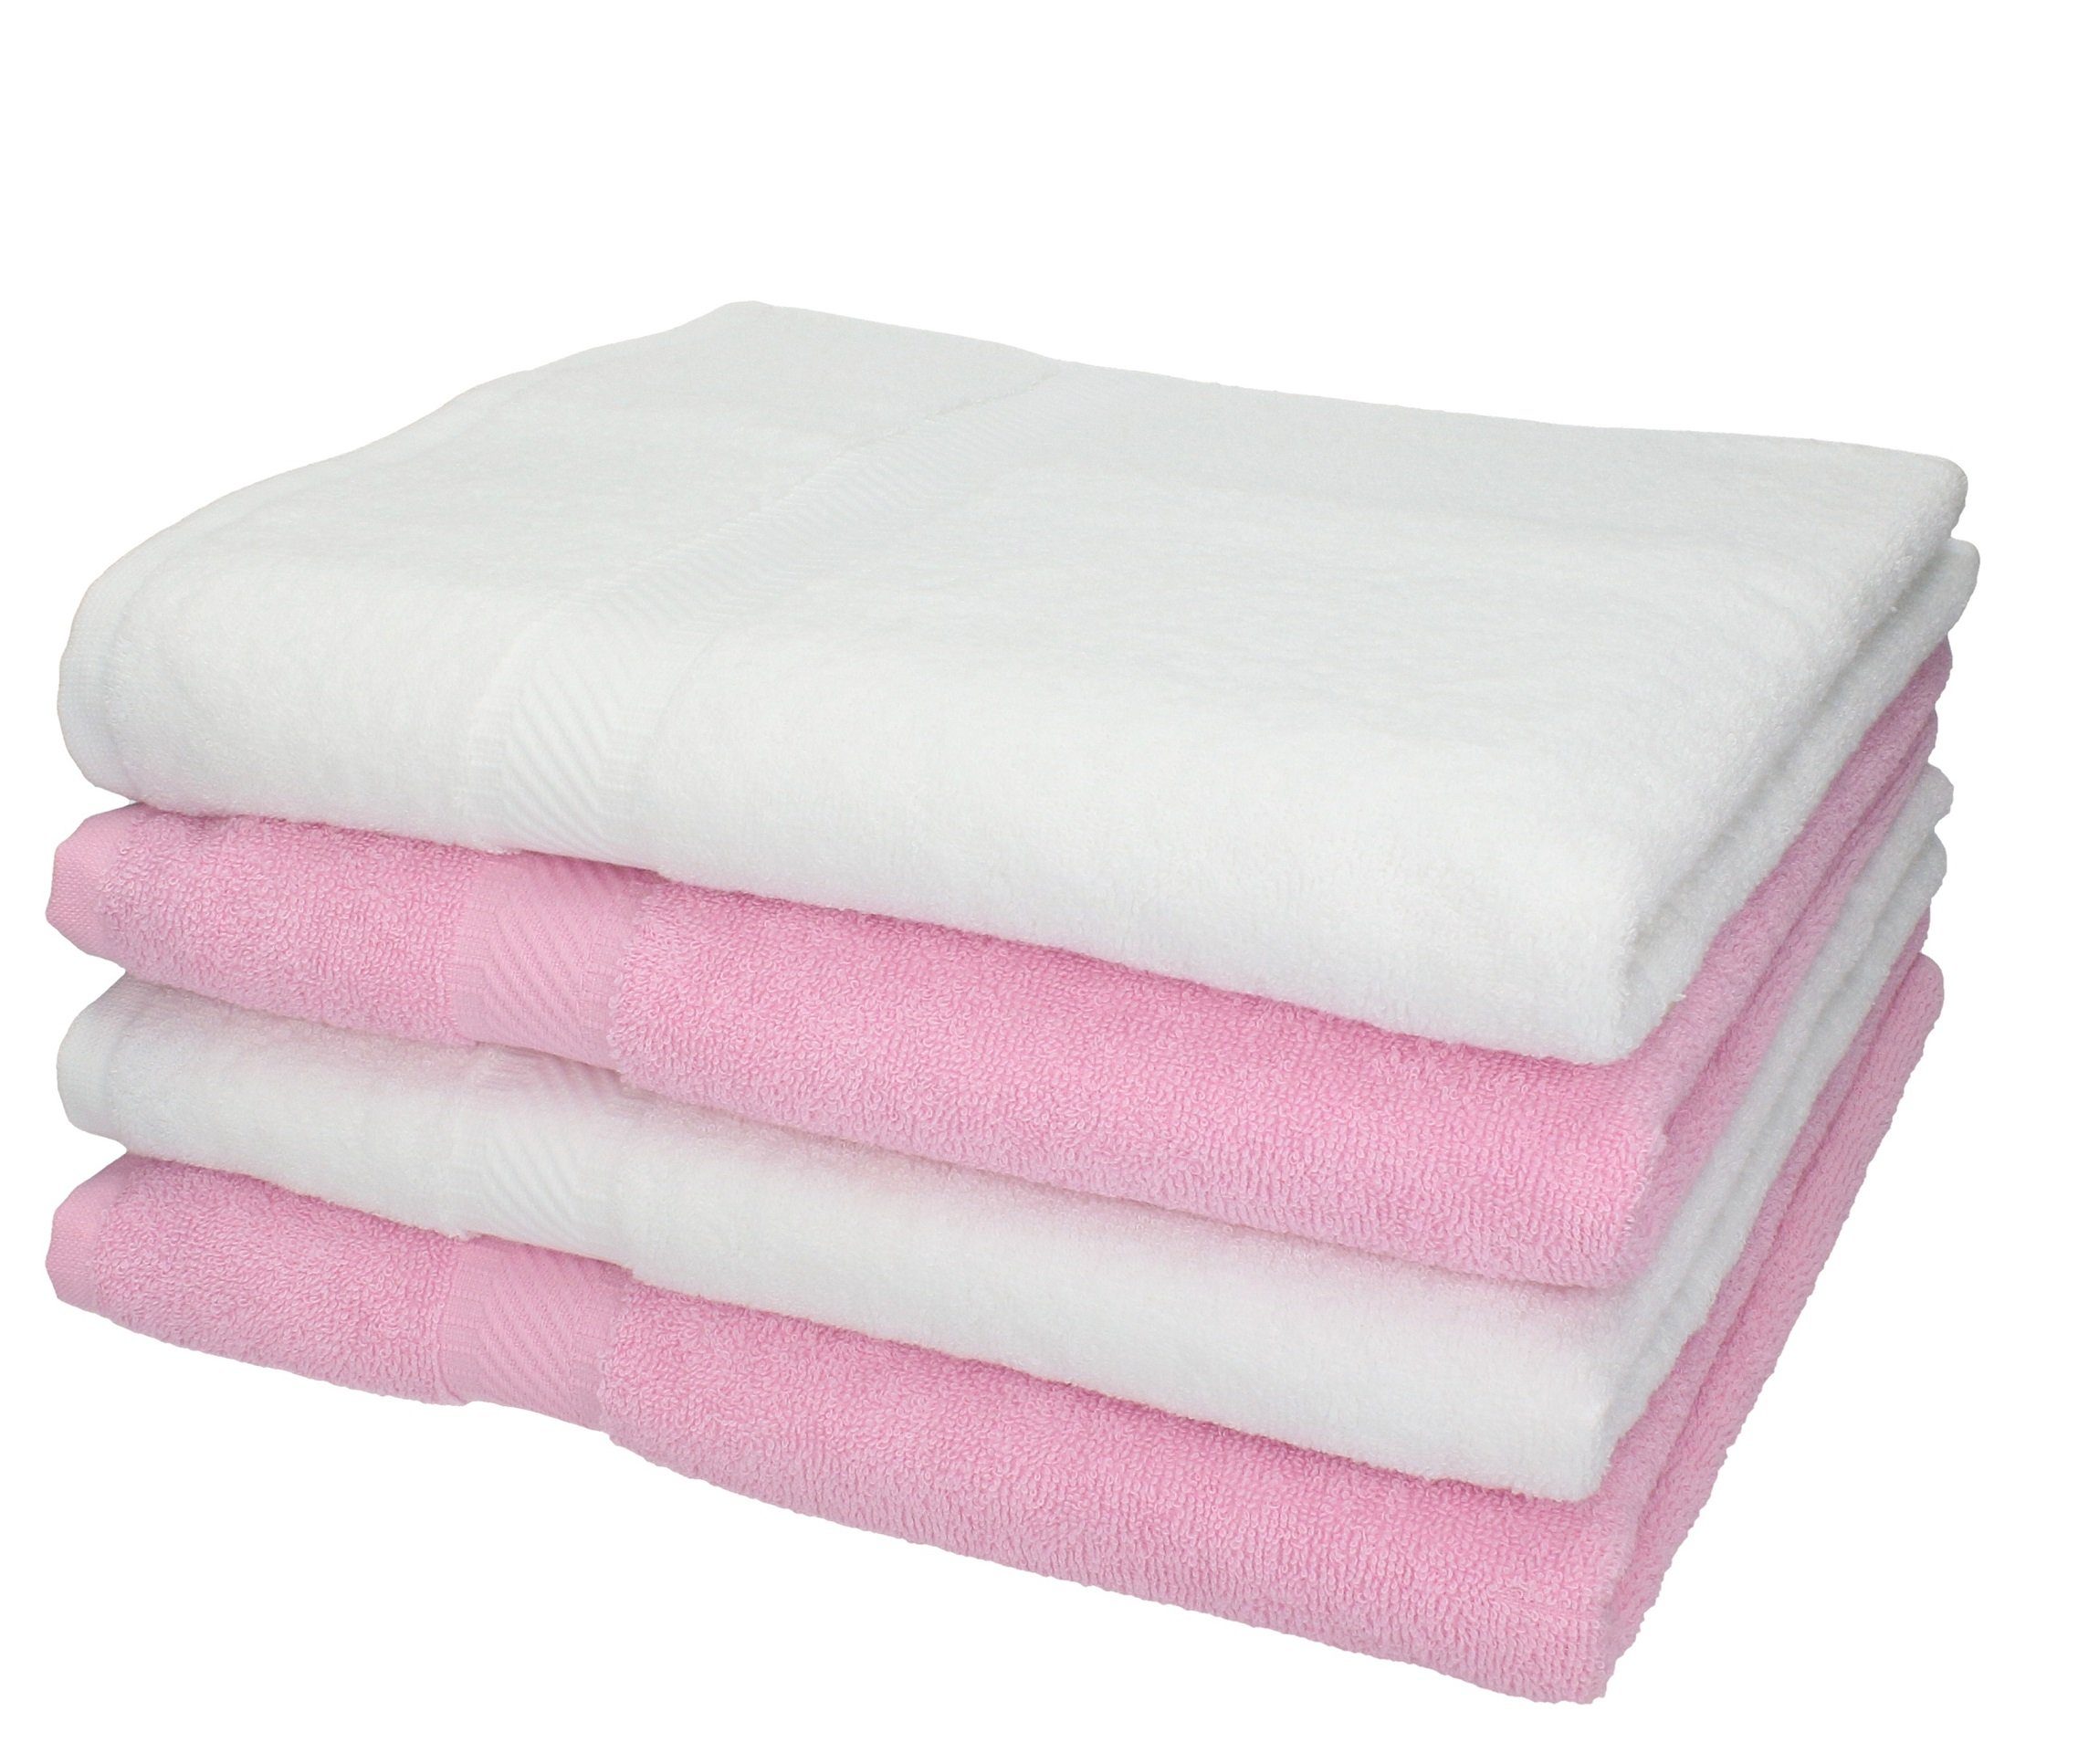 Betz Duschtücher 4 Stück Duschtücher Palermo 100% Baumwolle Duschtuch-Set Farbe weiß und rosé, 100% Baumwolle